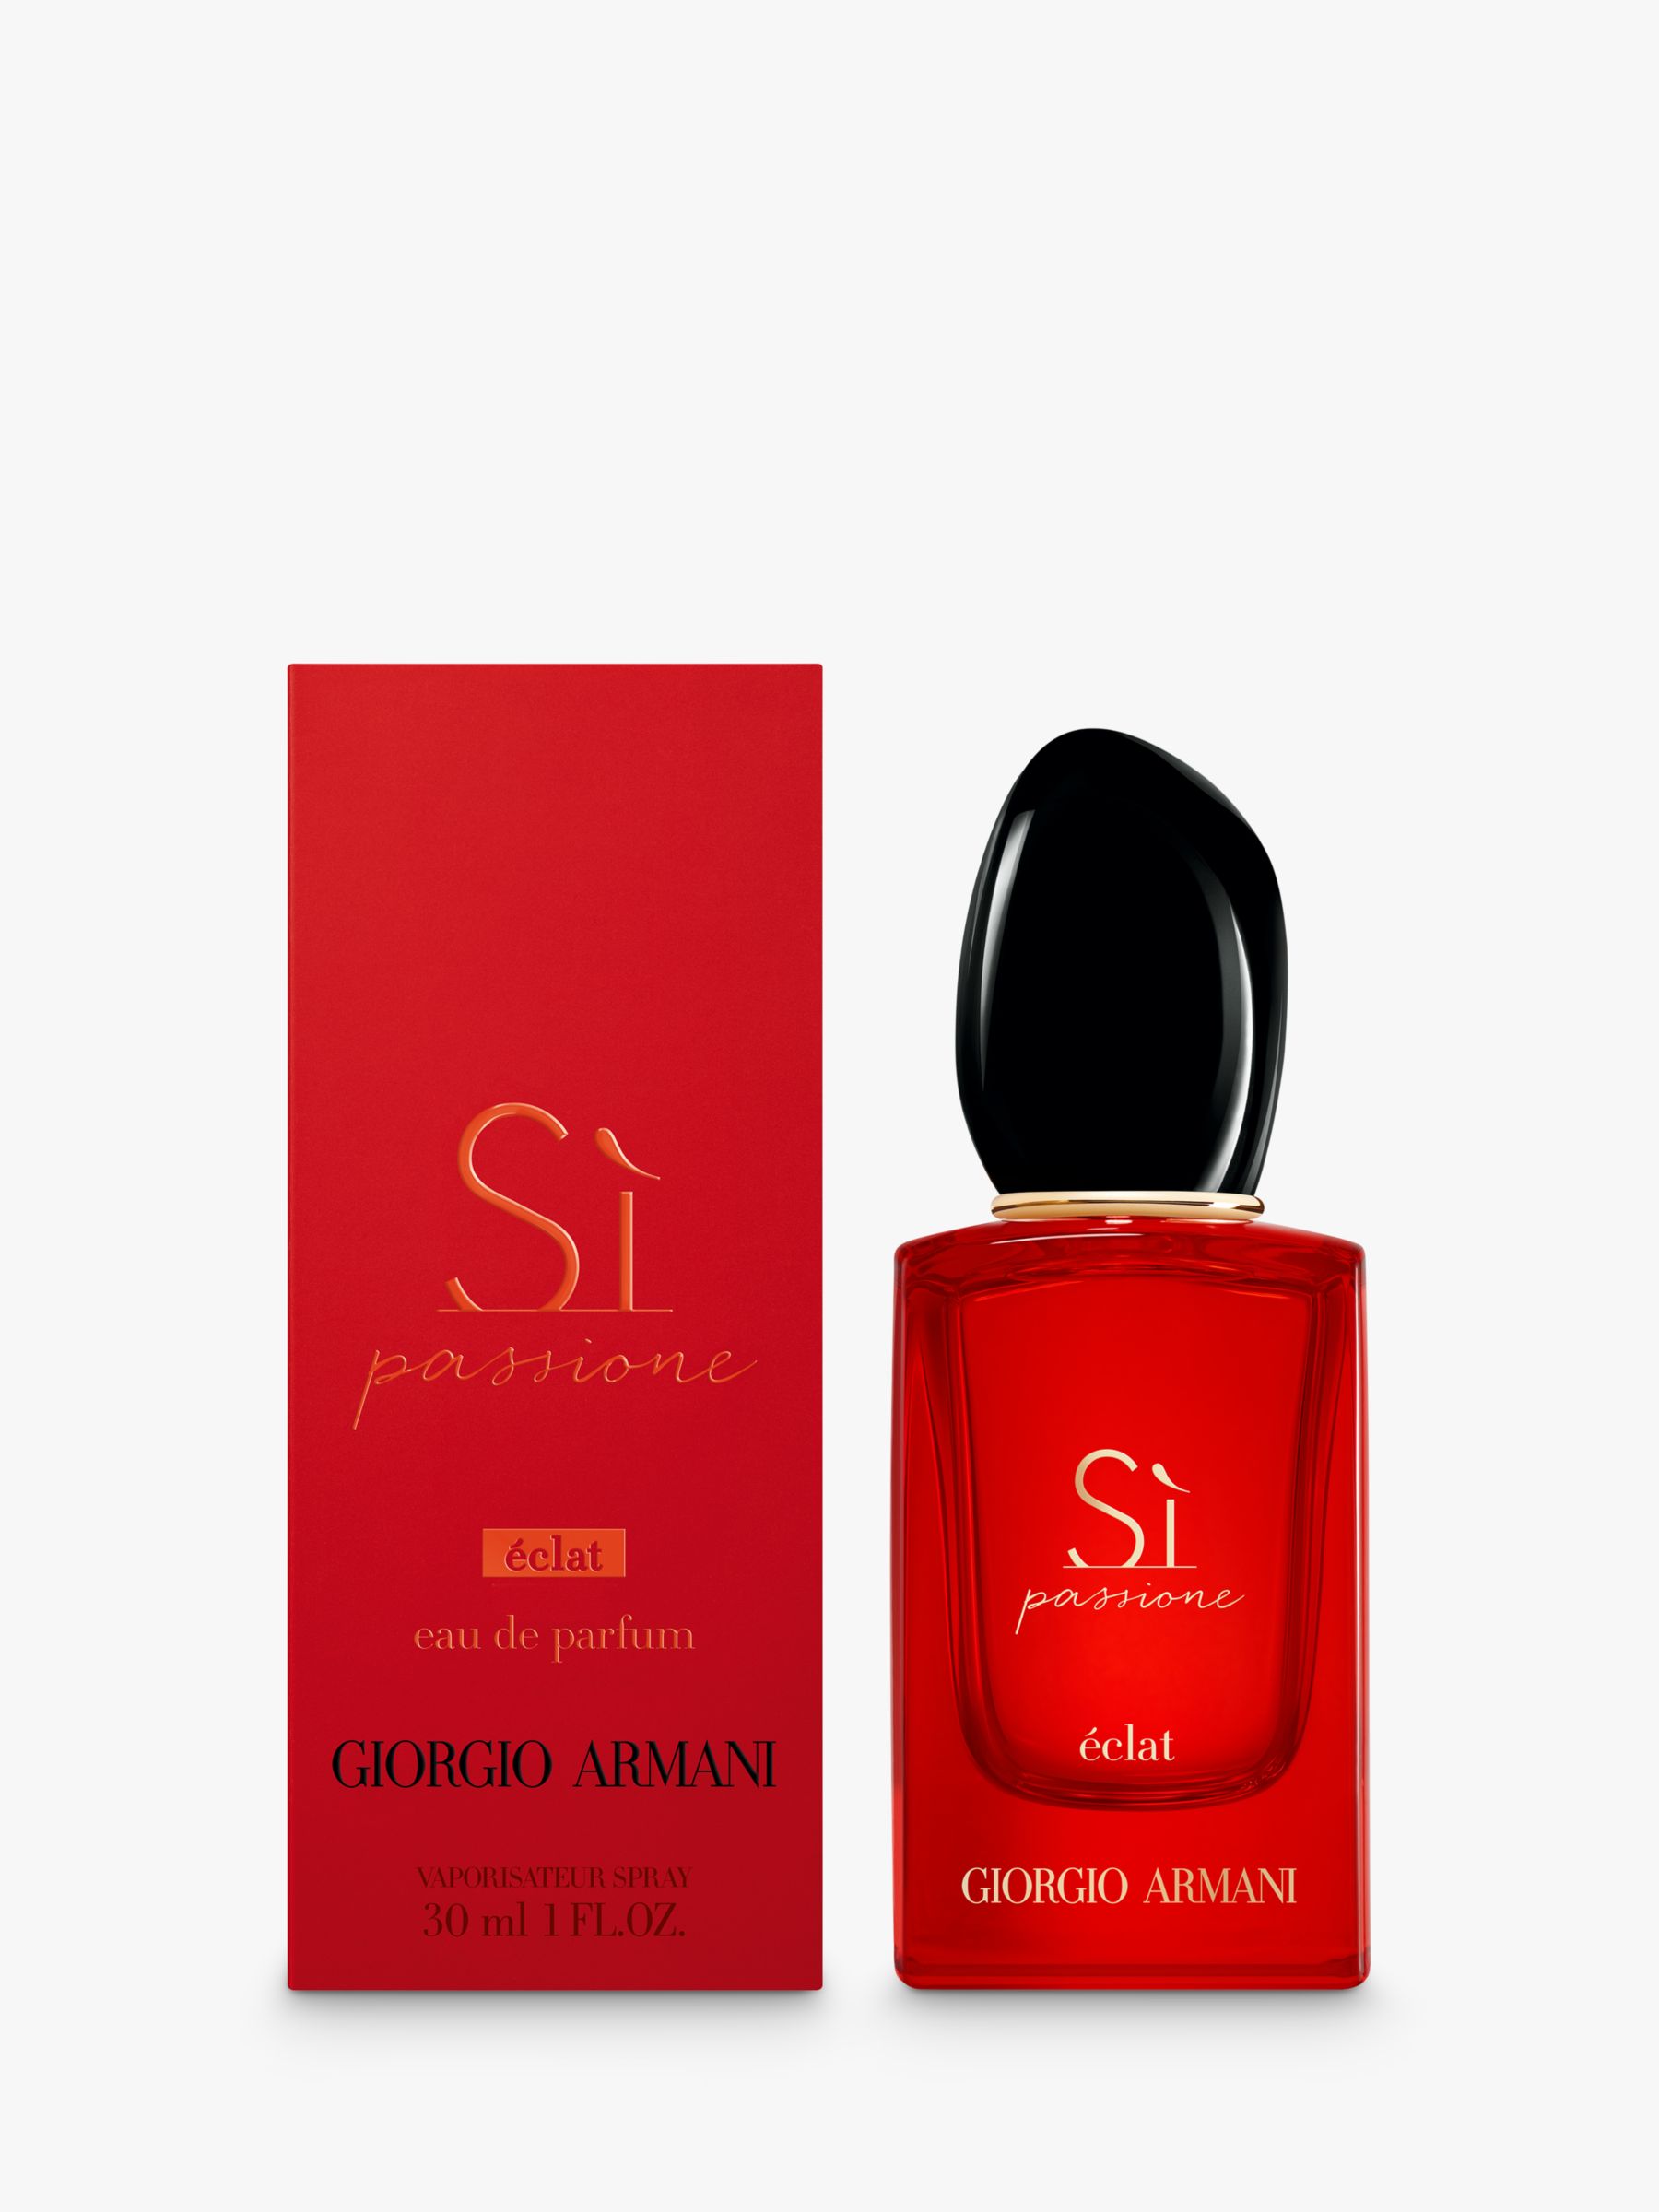 Giorgio Armani Si Passione Eclat Eau de Parfum, 30ml 2